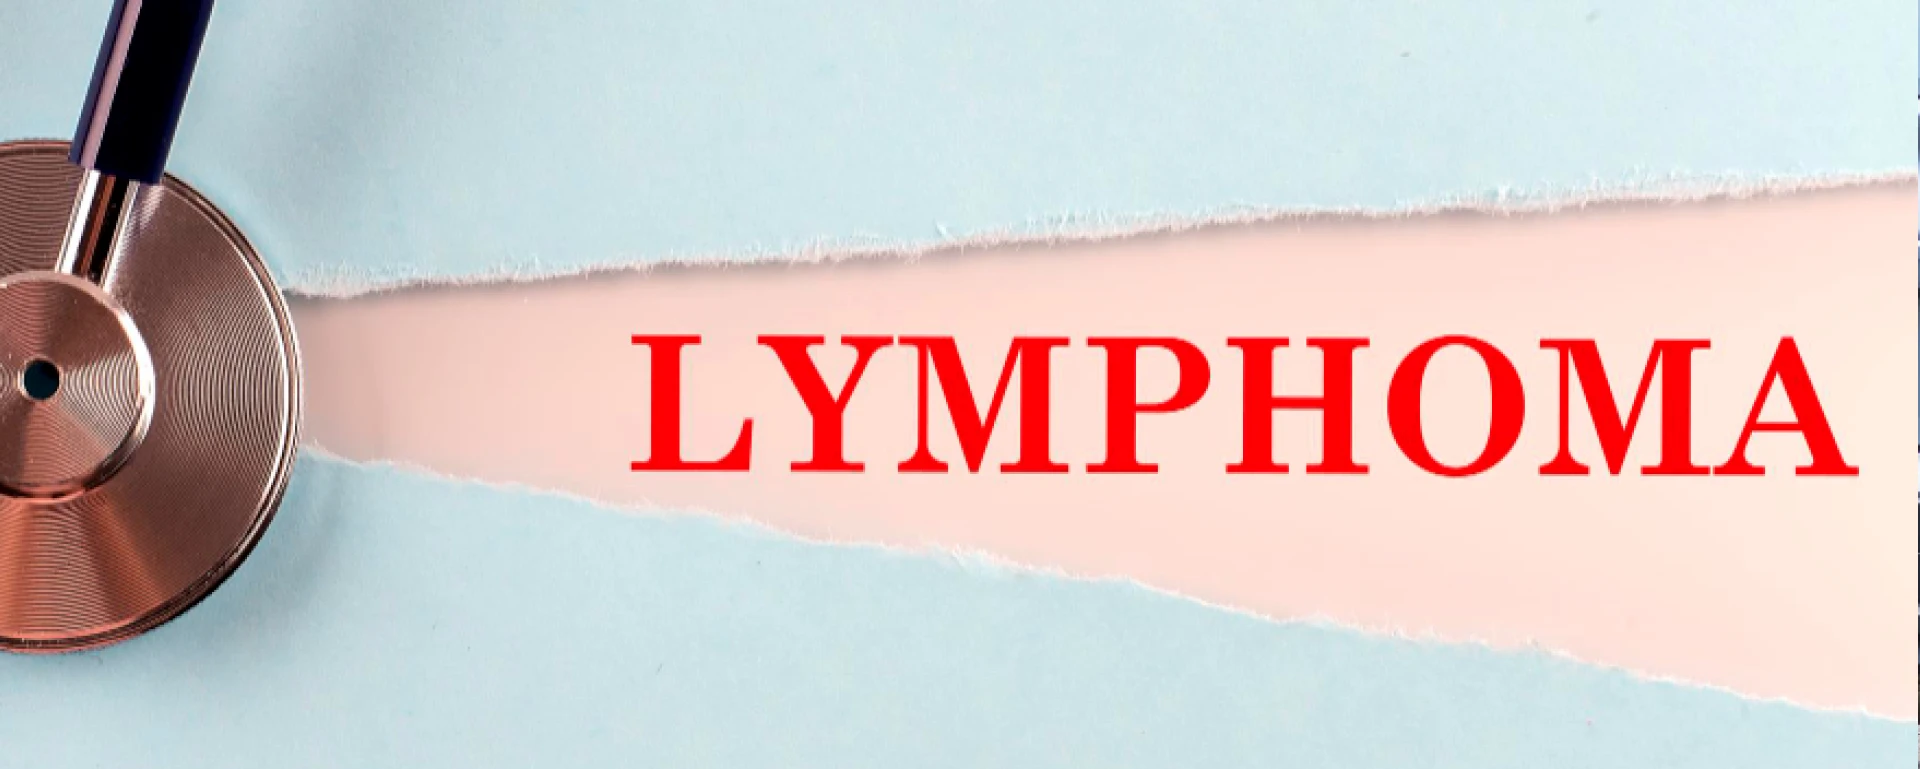 Roundup and Non-Hodgkin’s Lymphoma